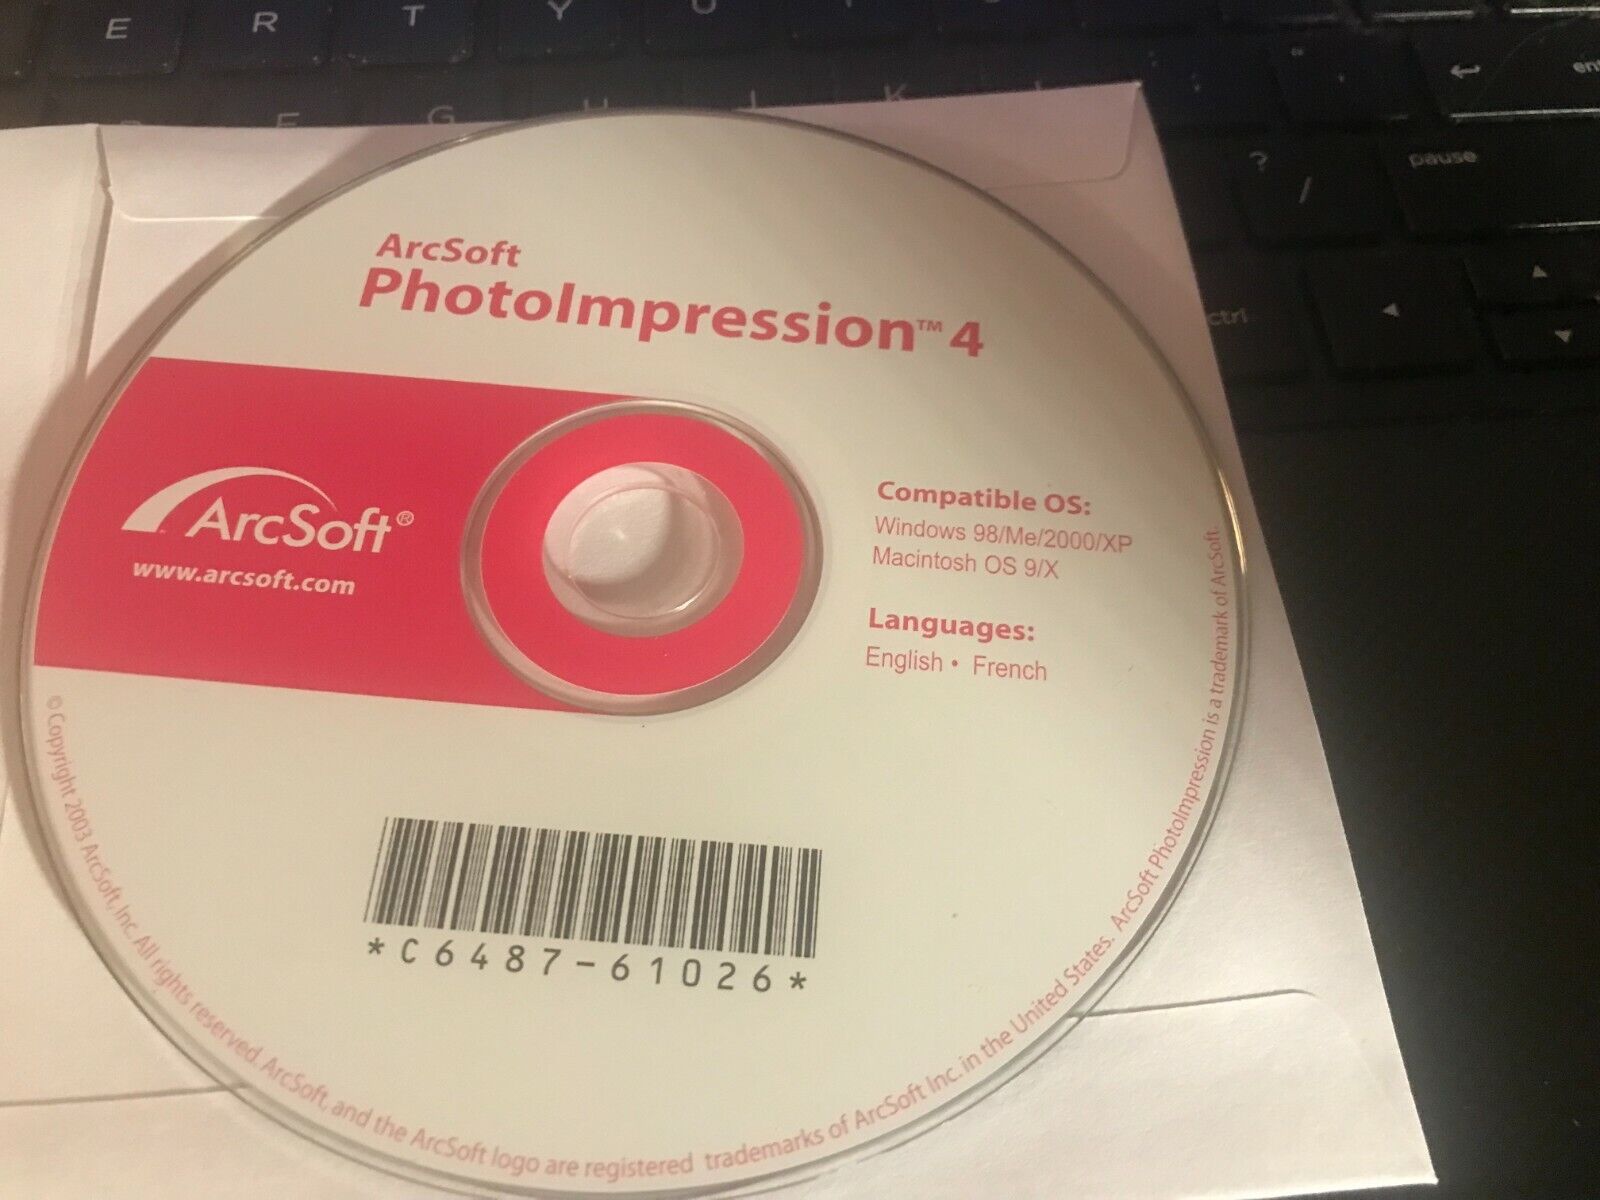 ArcSoft Photo Impression 4 Photo Editing Software CD Windows XP Me 98 2000 disk